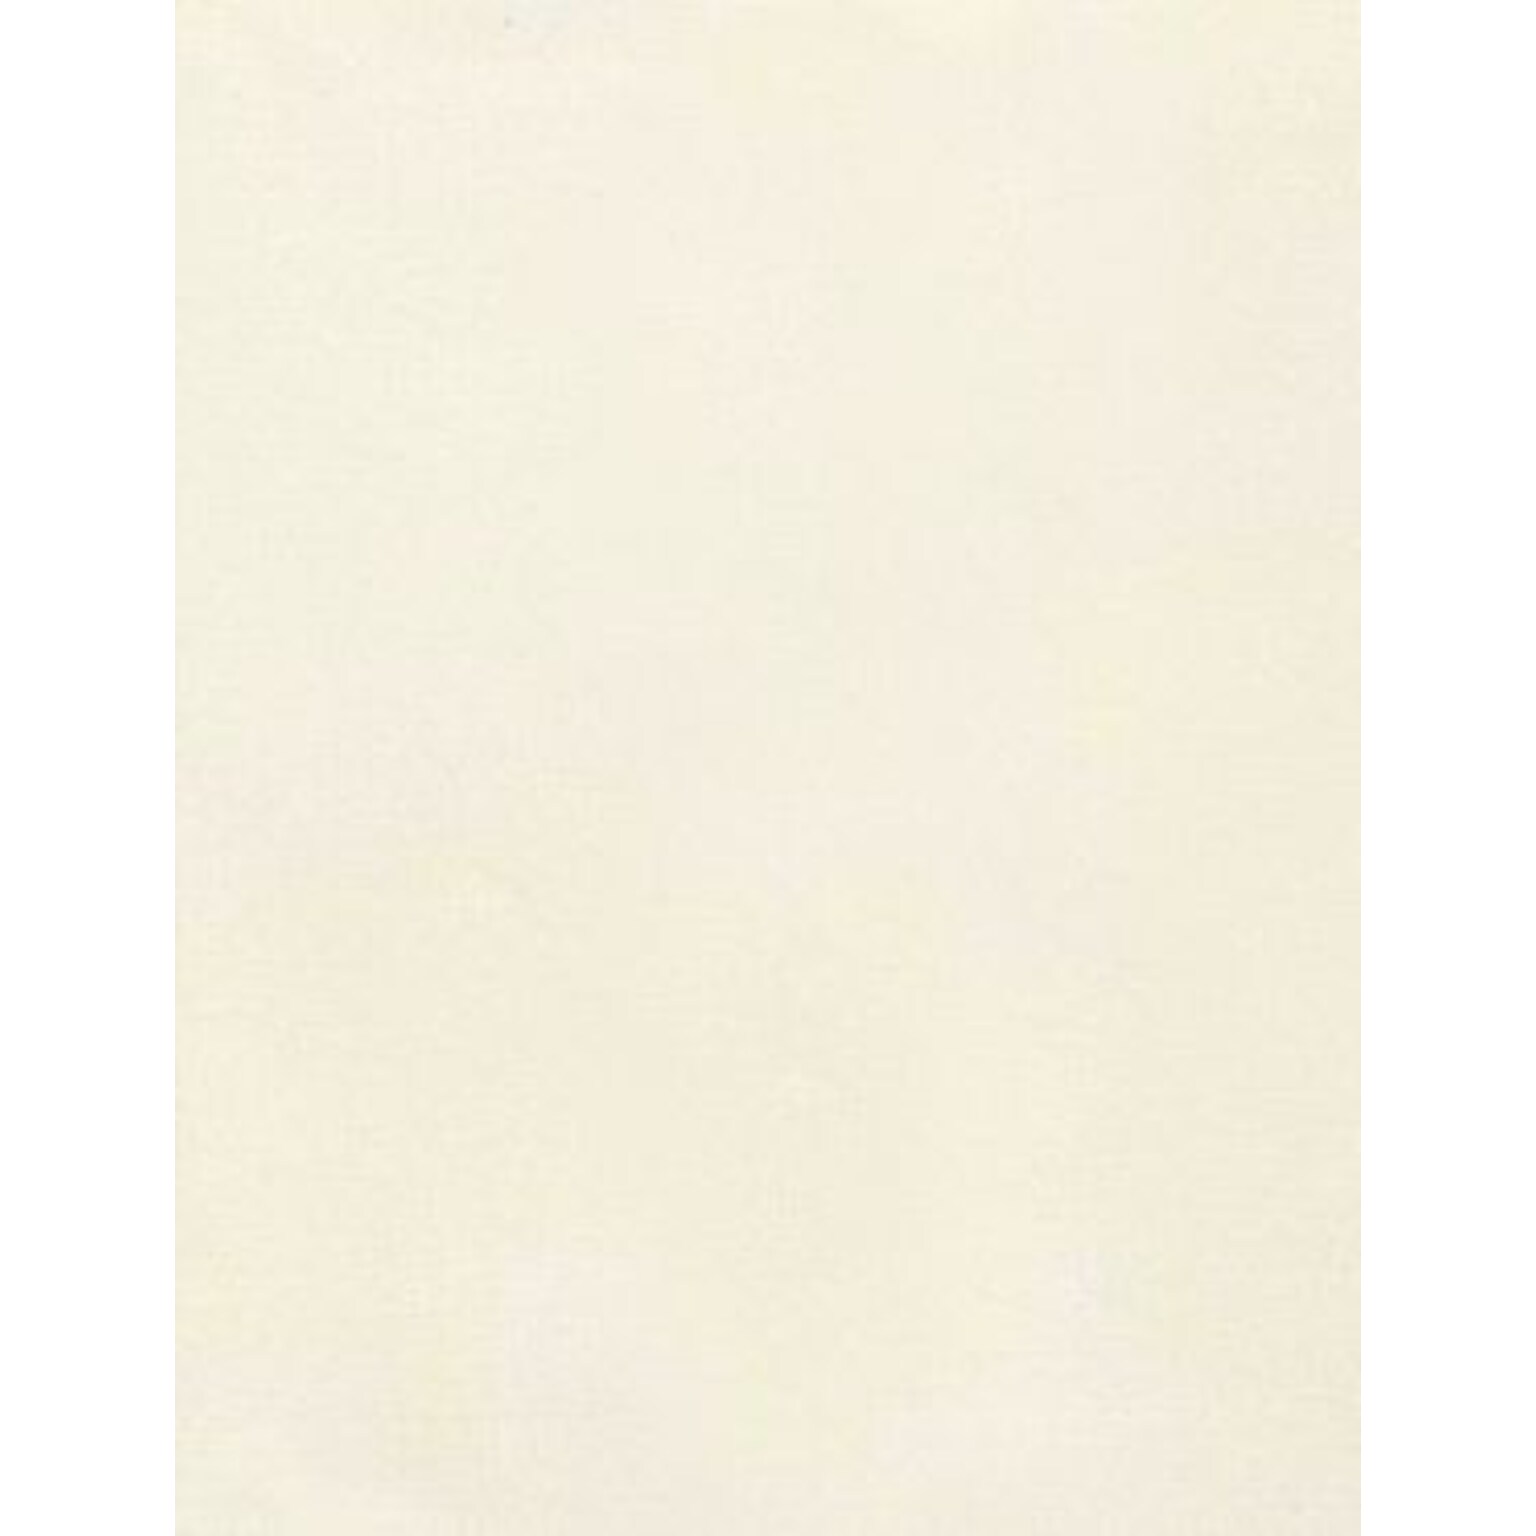 LUX Linen 100 lb. Cardstock Paper, 11 x 17, Natural Linen, 250 Sheets/Ream (1117-C-NLI-250)